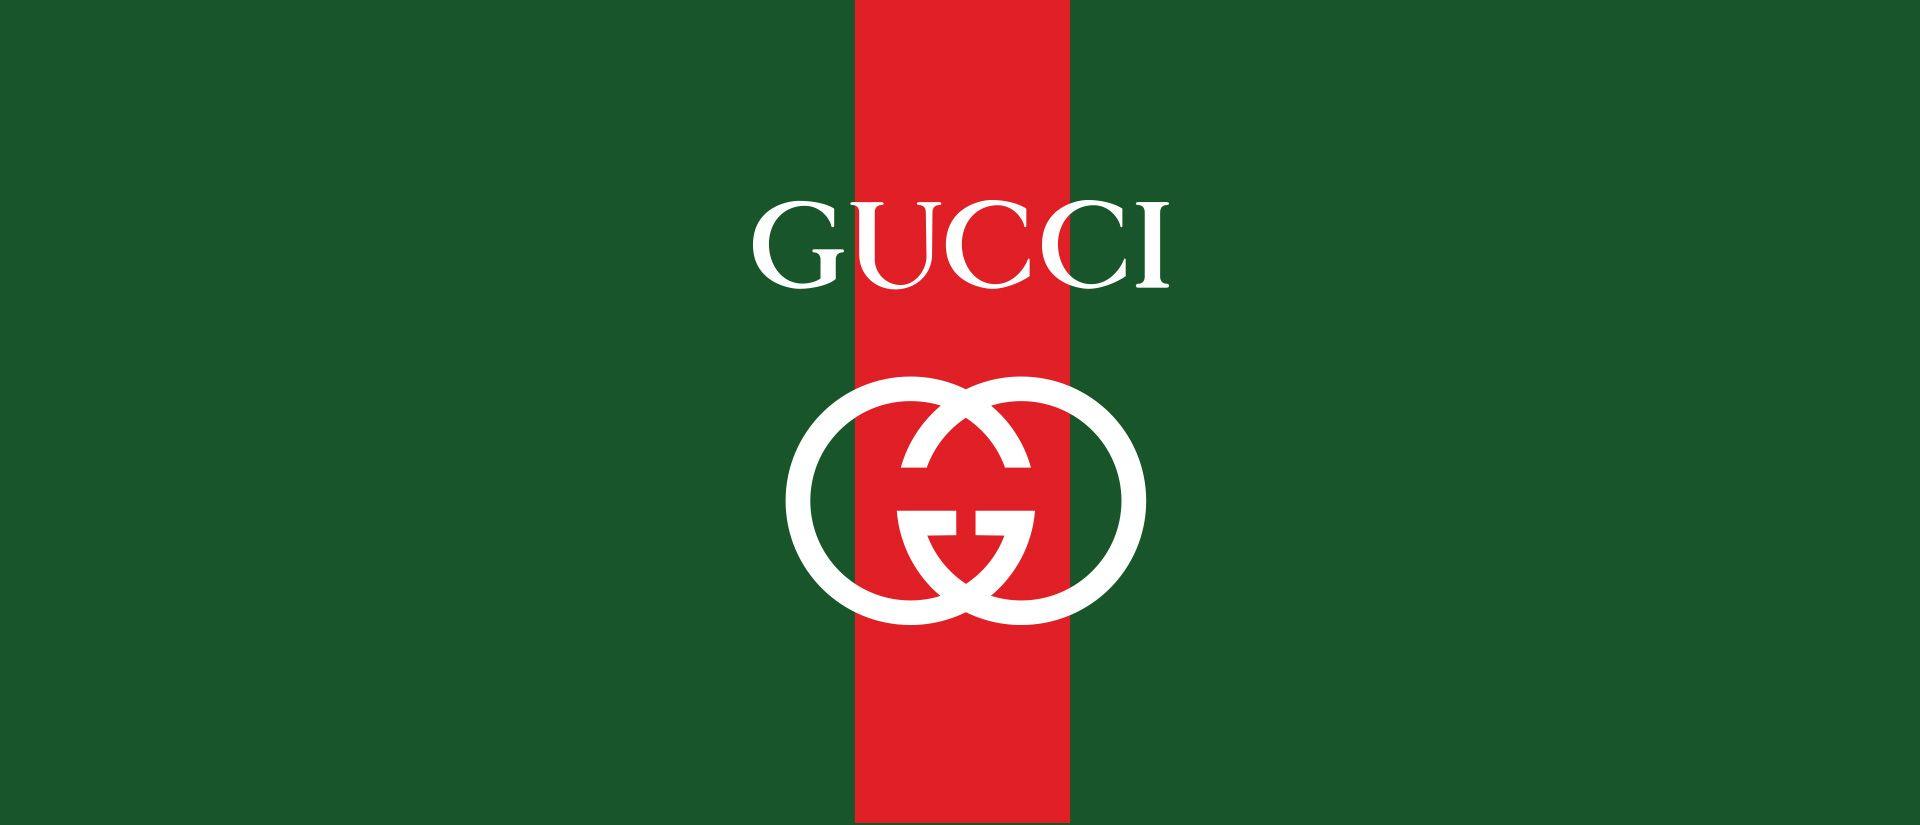 Red and Green Gucci Logo - Gucci 2017 Logos